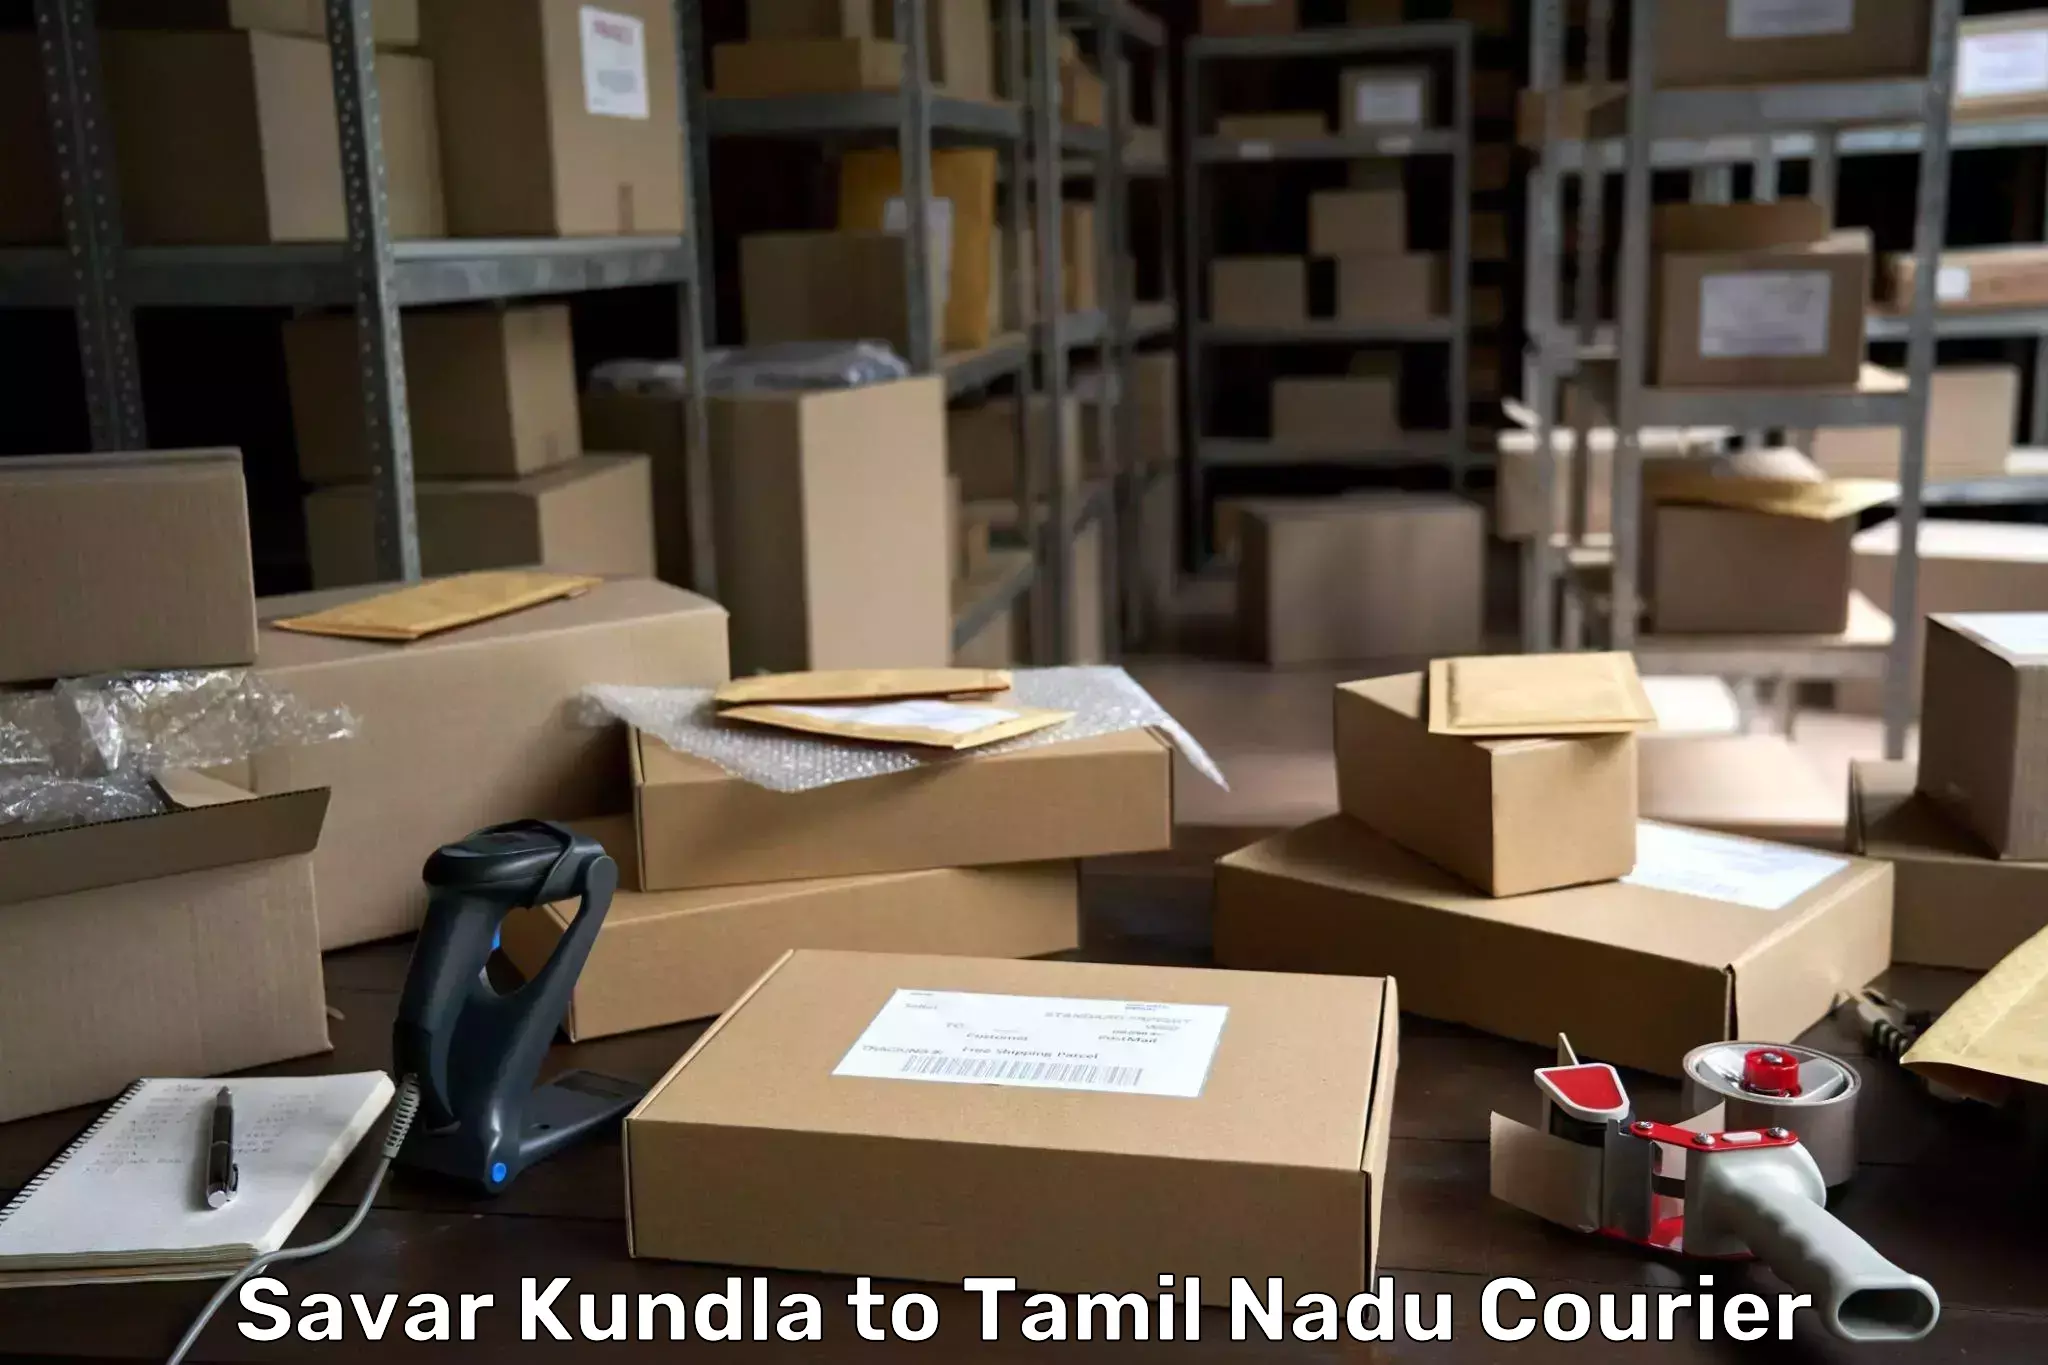 Courier service comparison Savar Kundla to Tenkasi